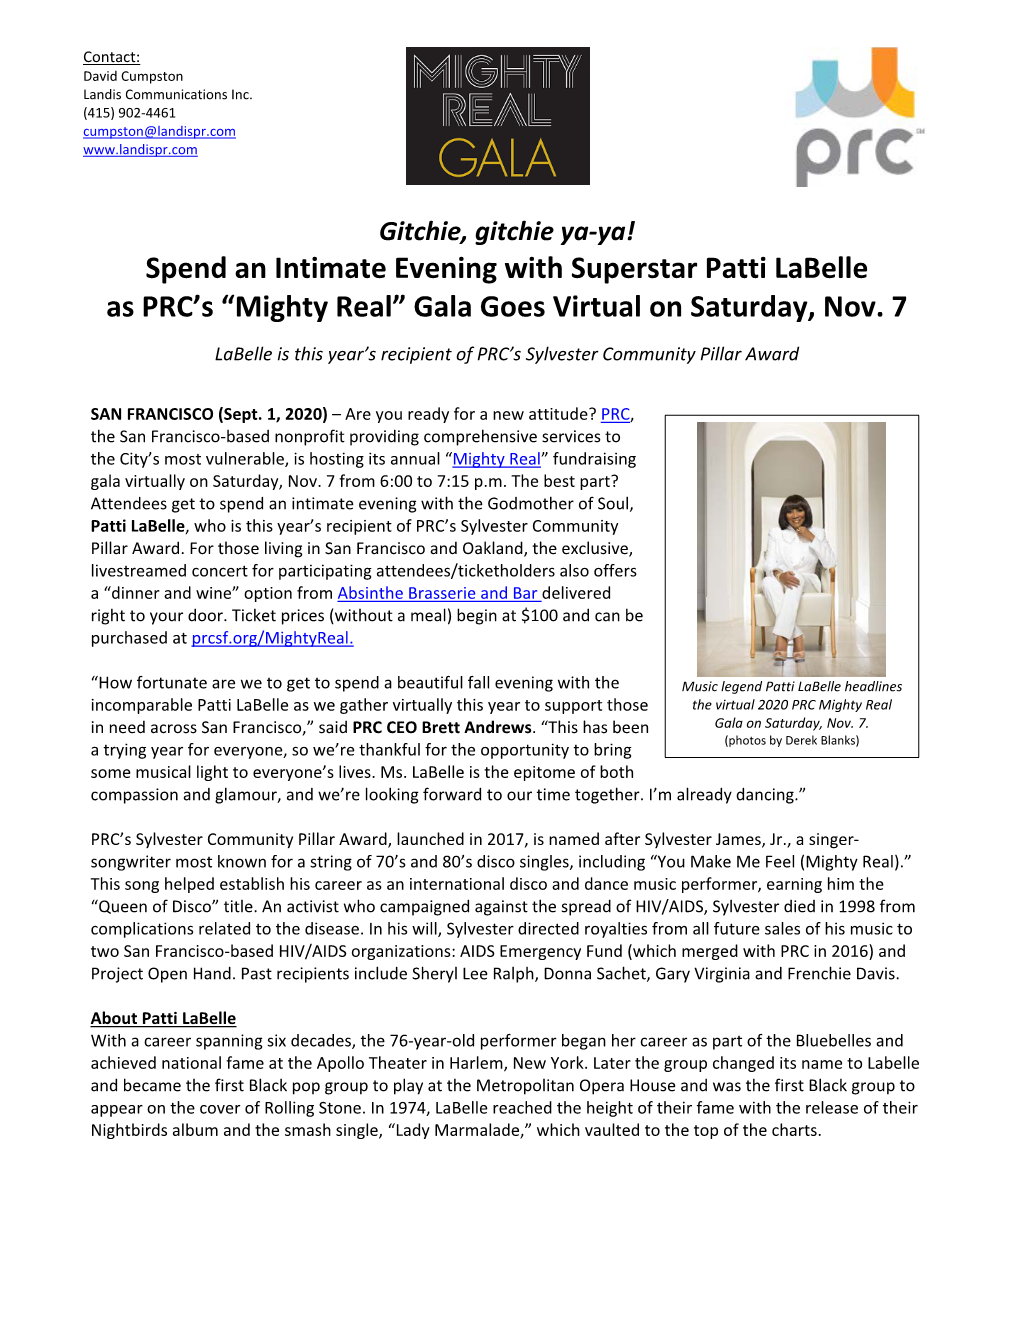 Mighty Real” Gala Goes Virtual on Saturday, Nov